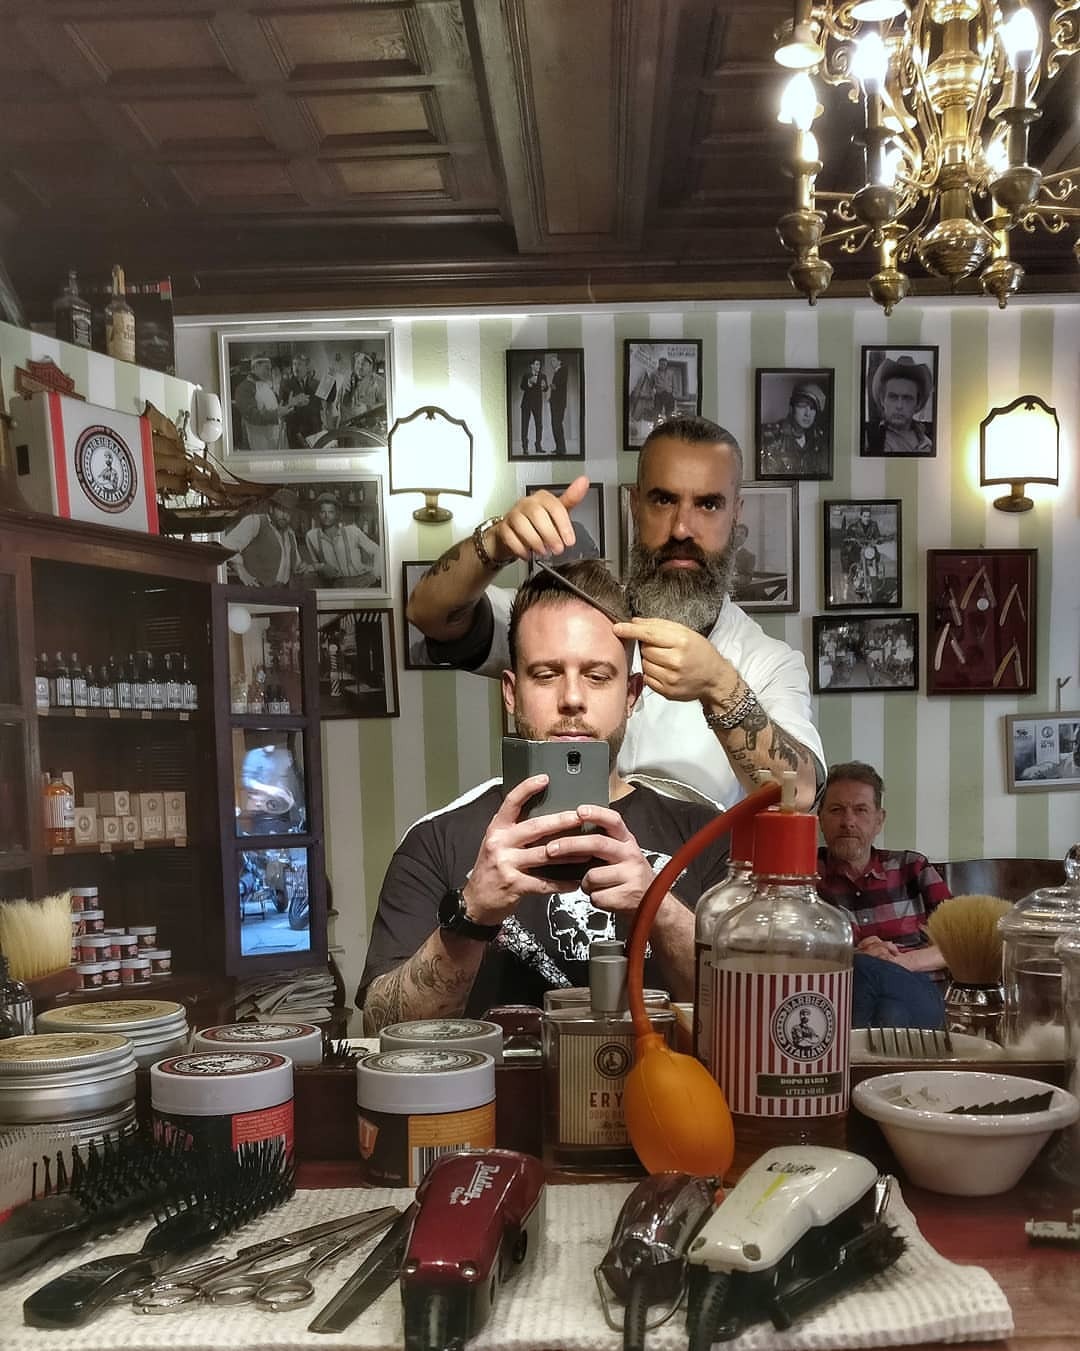 Pulizie di primavera 💈 ✂ #barbershop #barber #beard  (presso Barber Shop  Dino